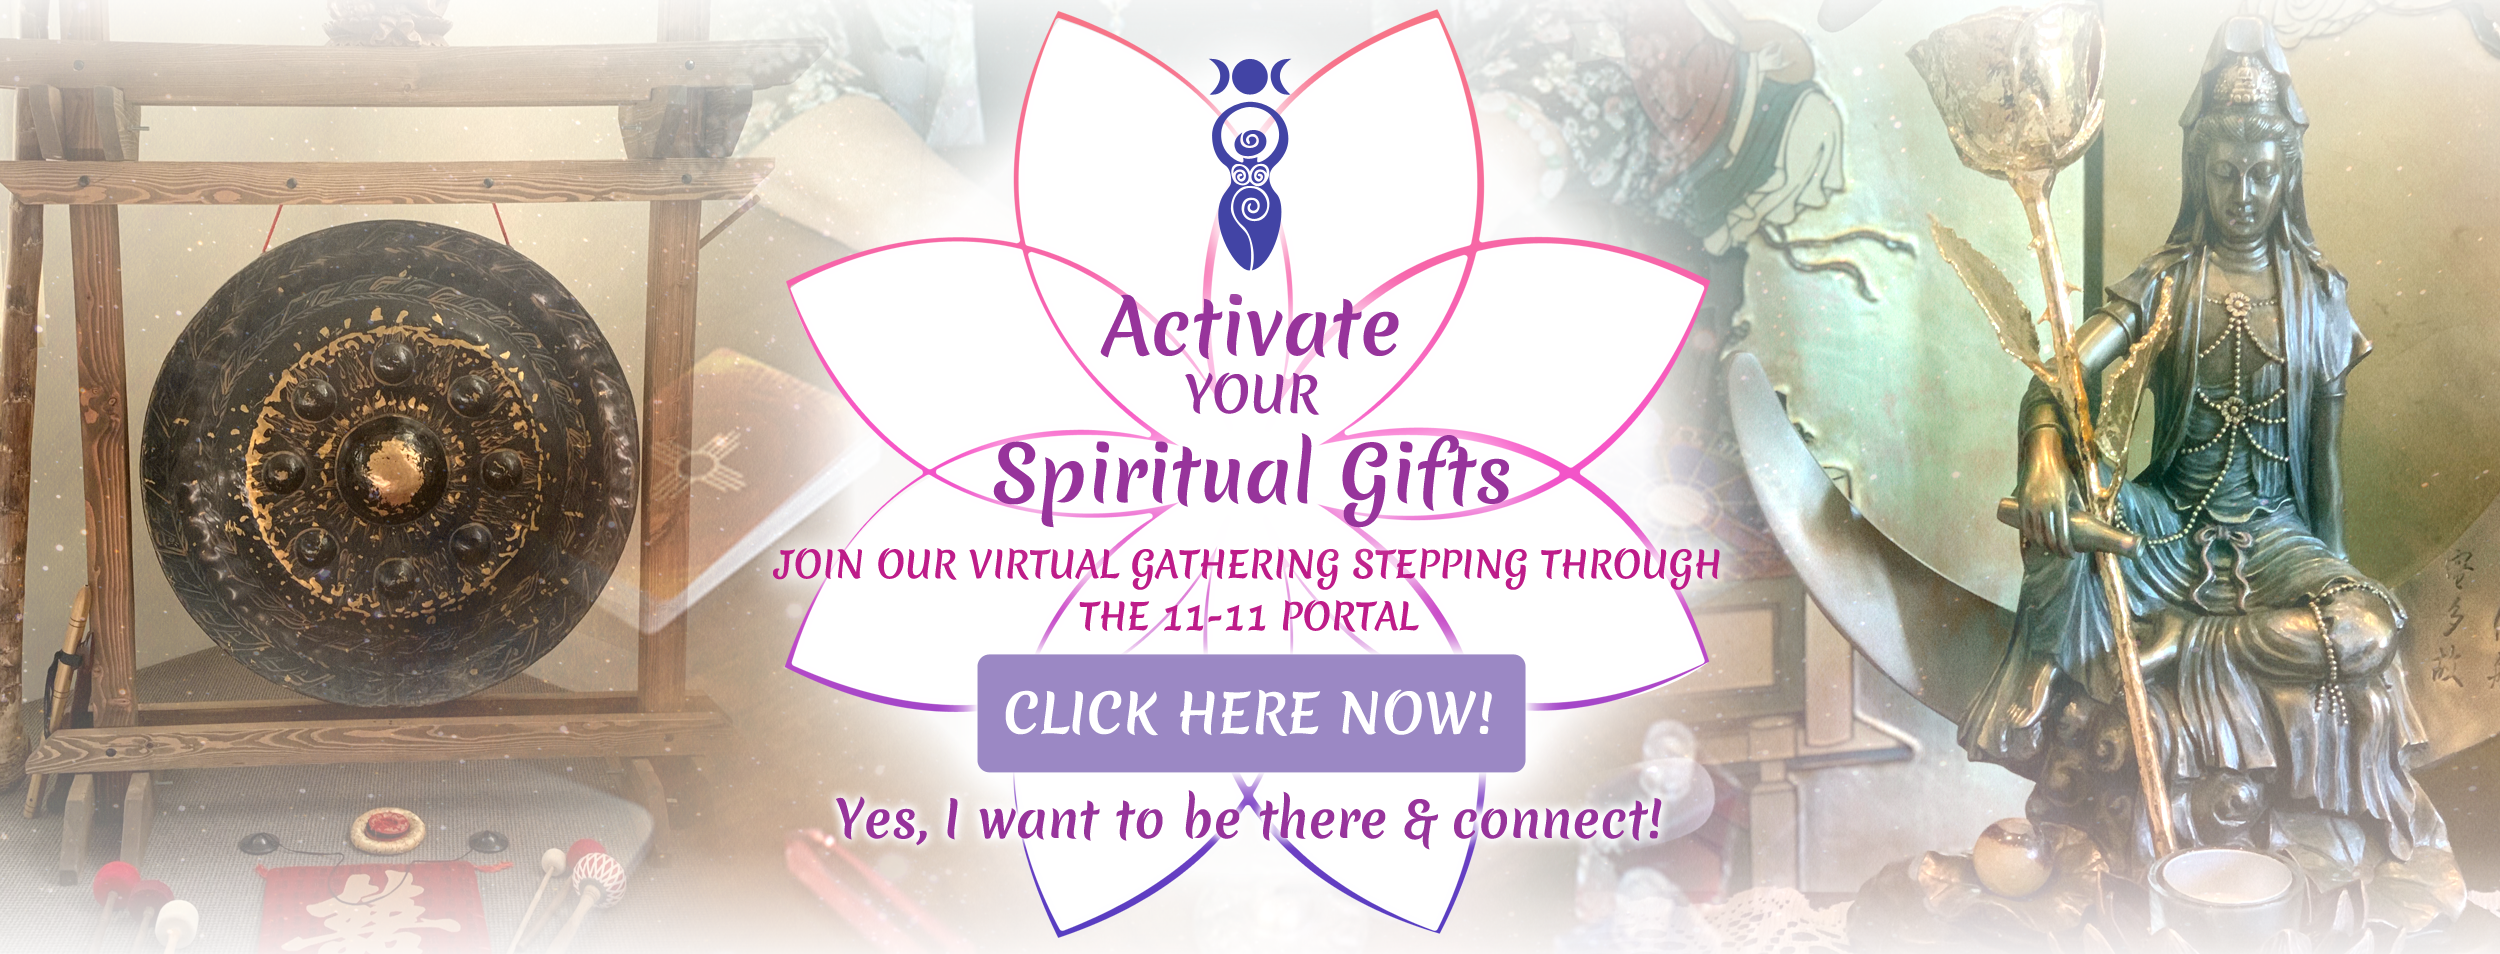 Activate Your Spiritual Gifts by Valerie Shakti Bottazzi Spiritual Teacher, Healer, Coach